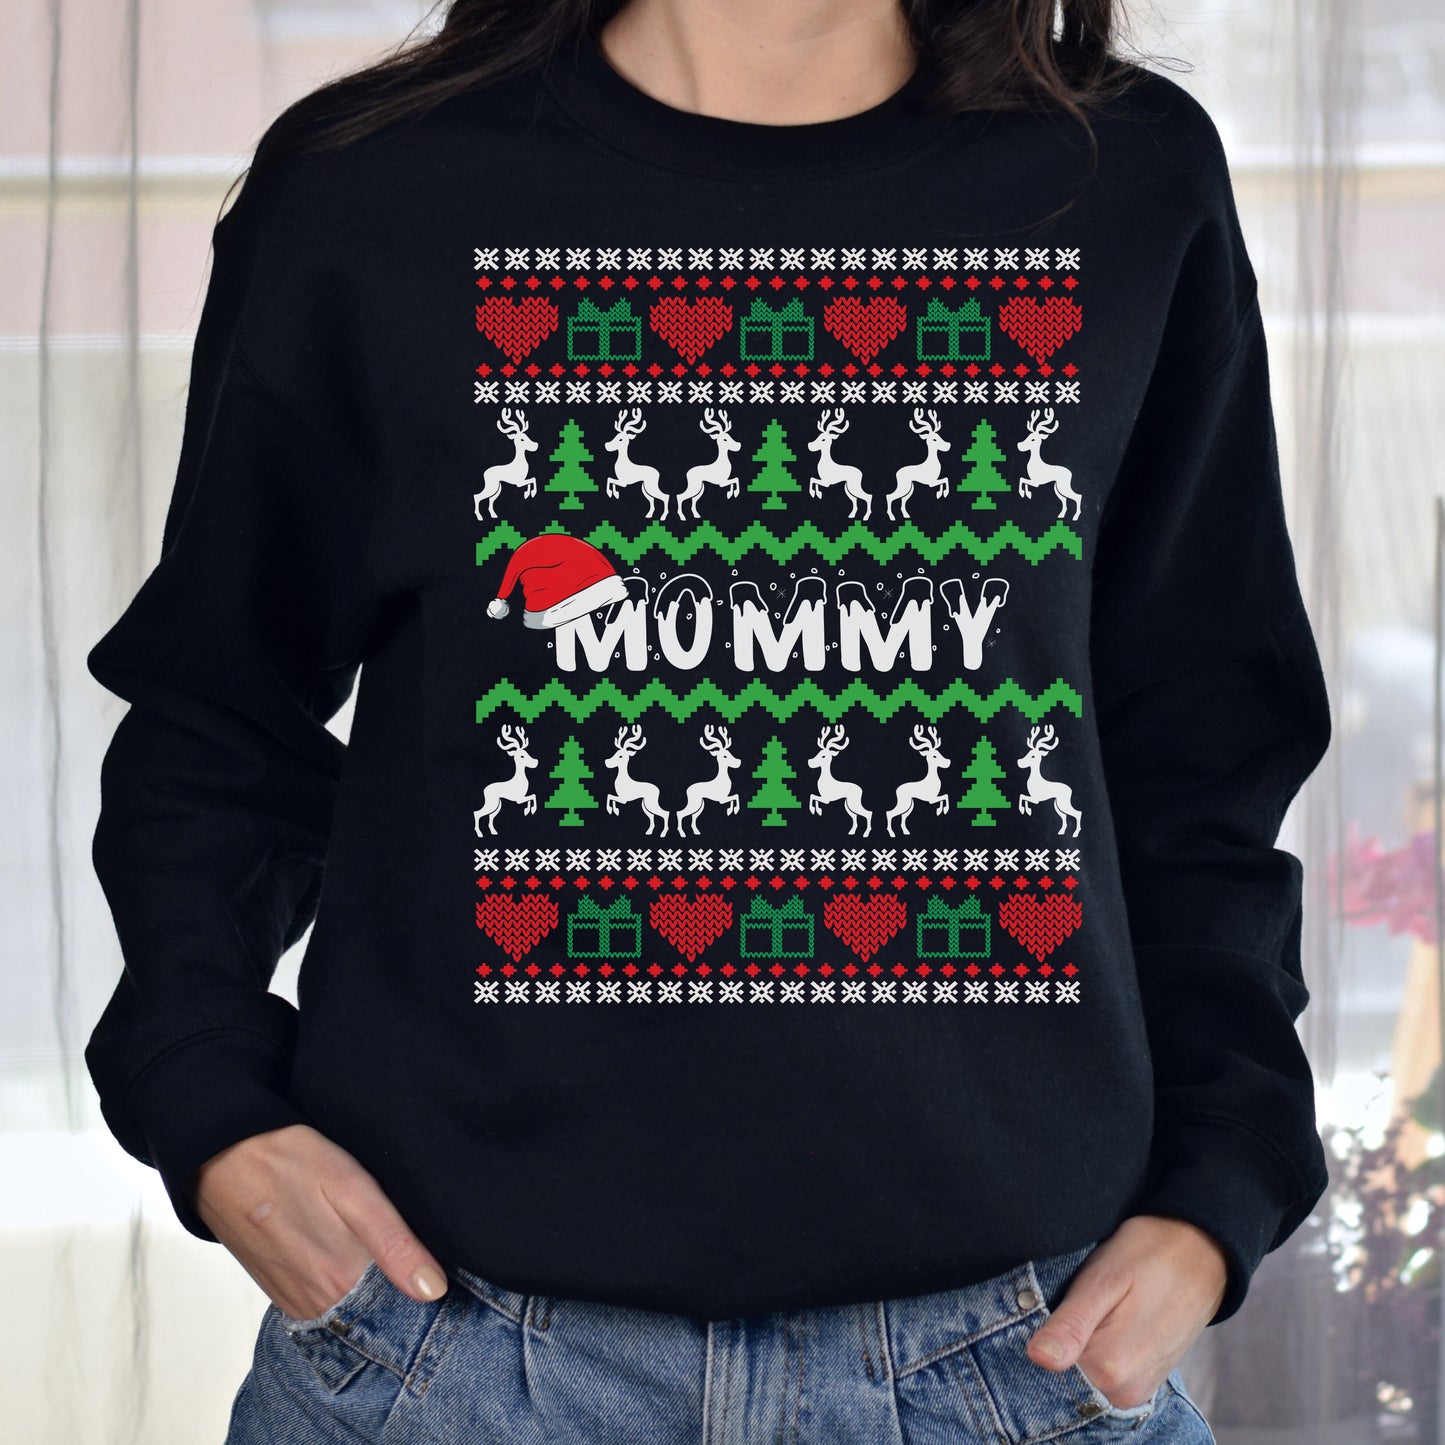 Mommy Christmas Unisex grandma Sweatshirt Ugly sweater Black Dark Heather-Family-Gift-Planet